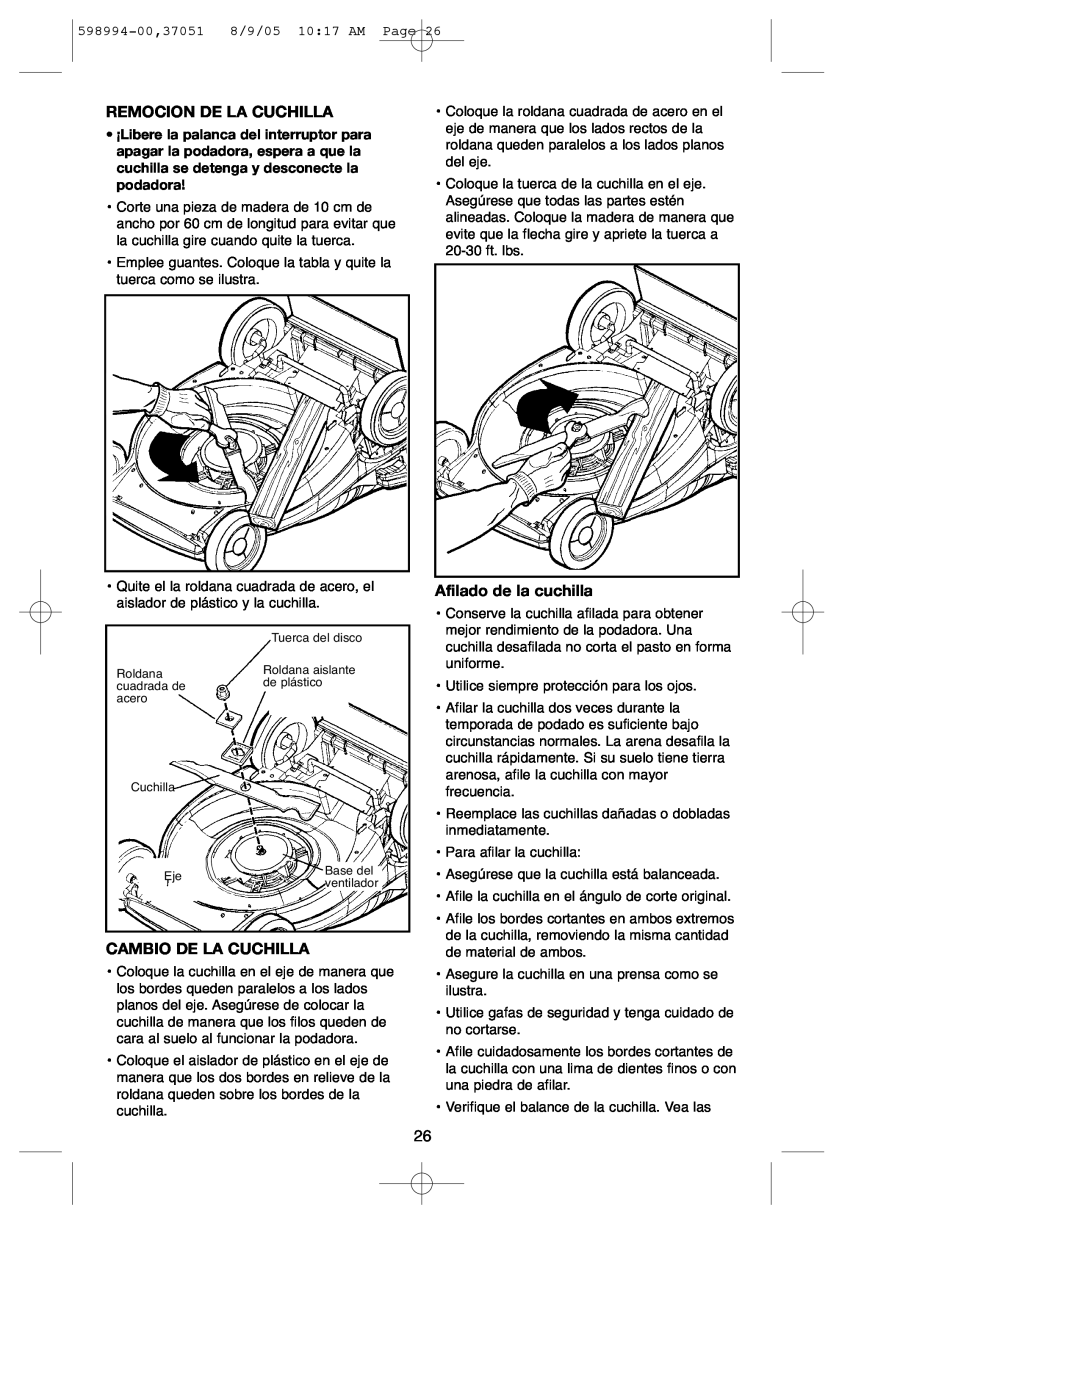 DeWalt 900.37051 instruction manual Remocion De La Cuchilla, Cambio De La Cuchilla, Afilado de la cuchilla 